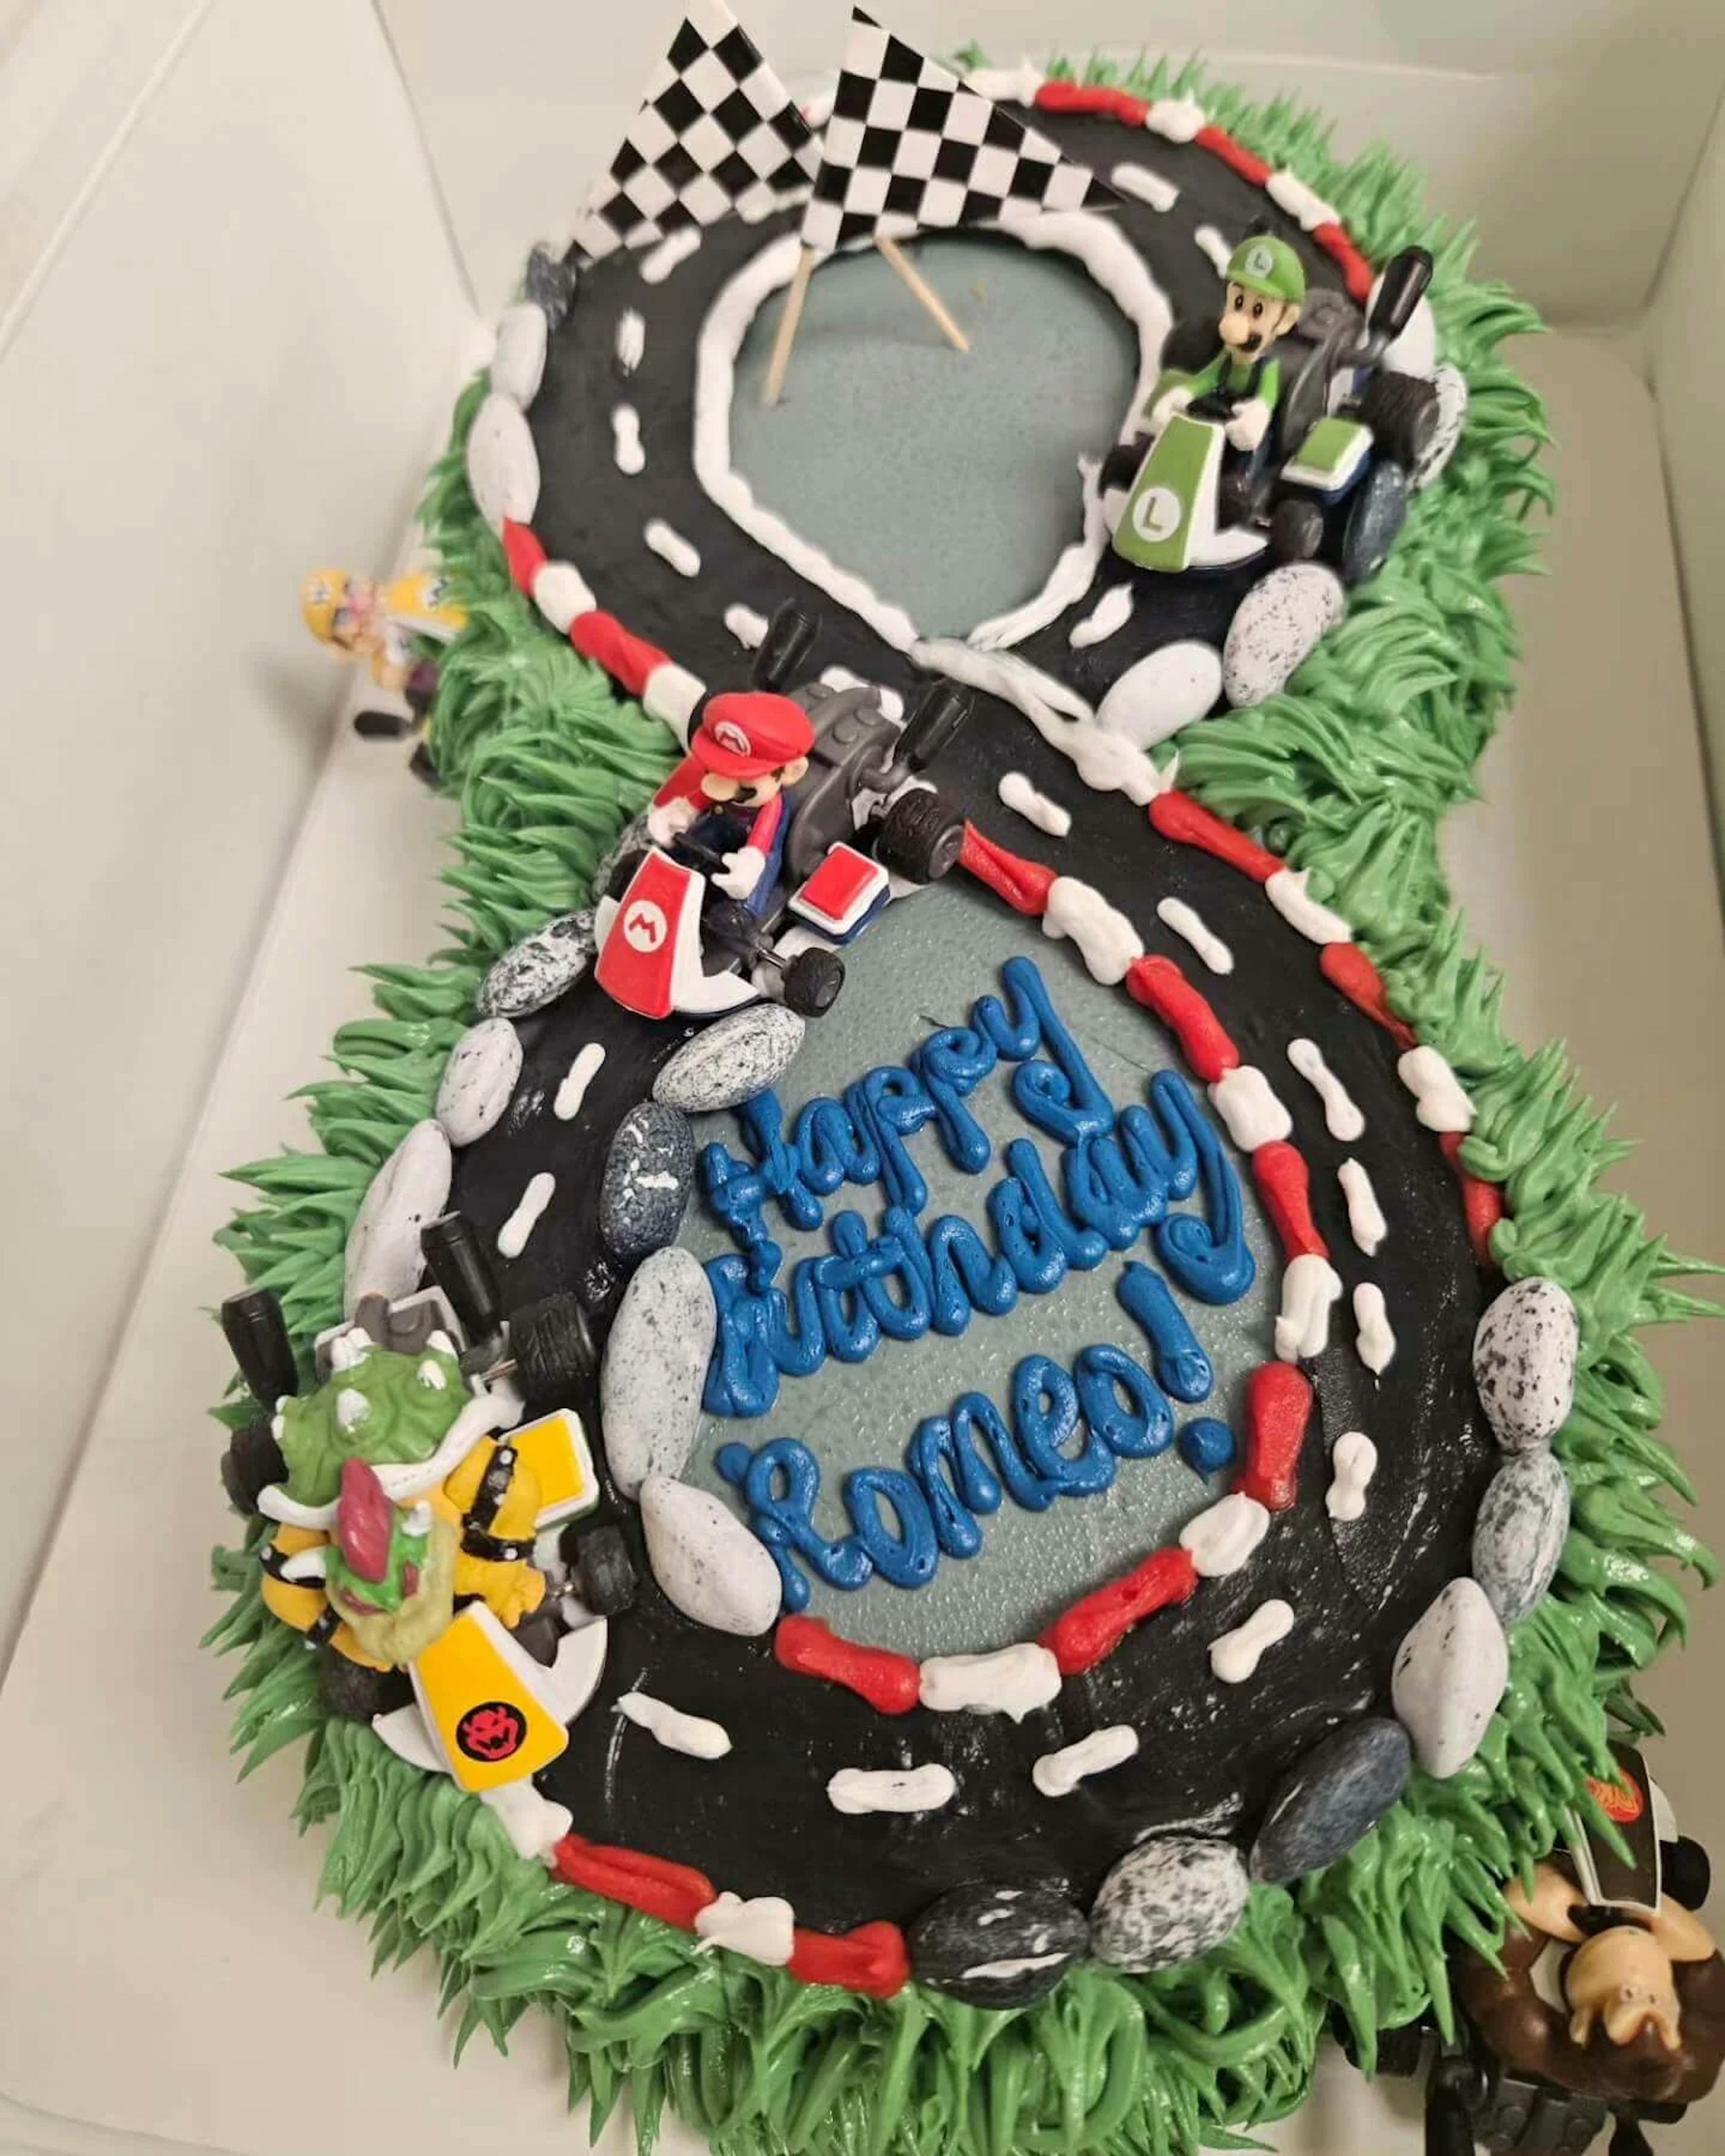 A Mario kart birthday cake.